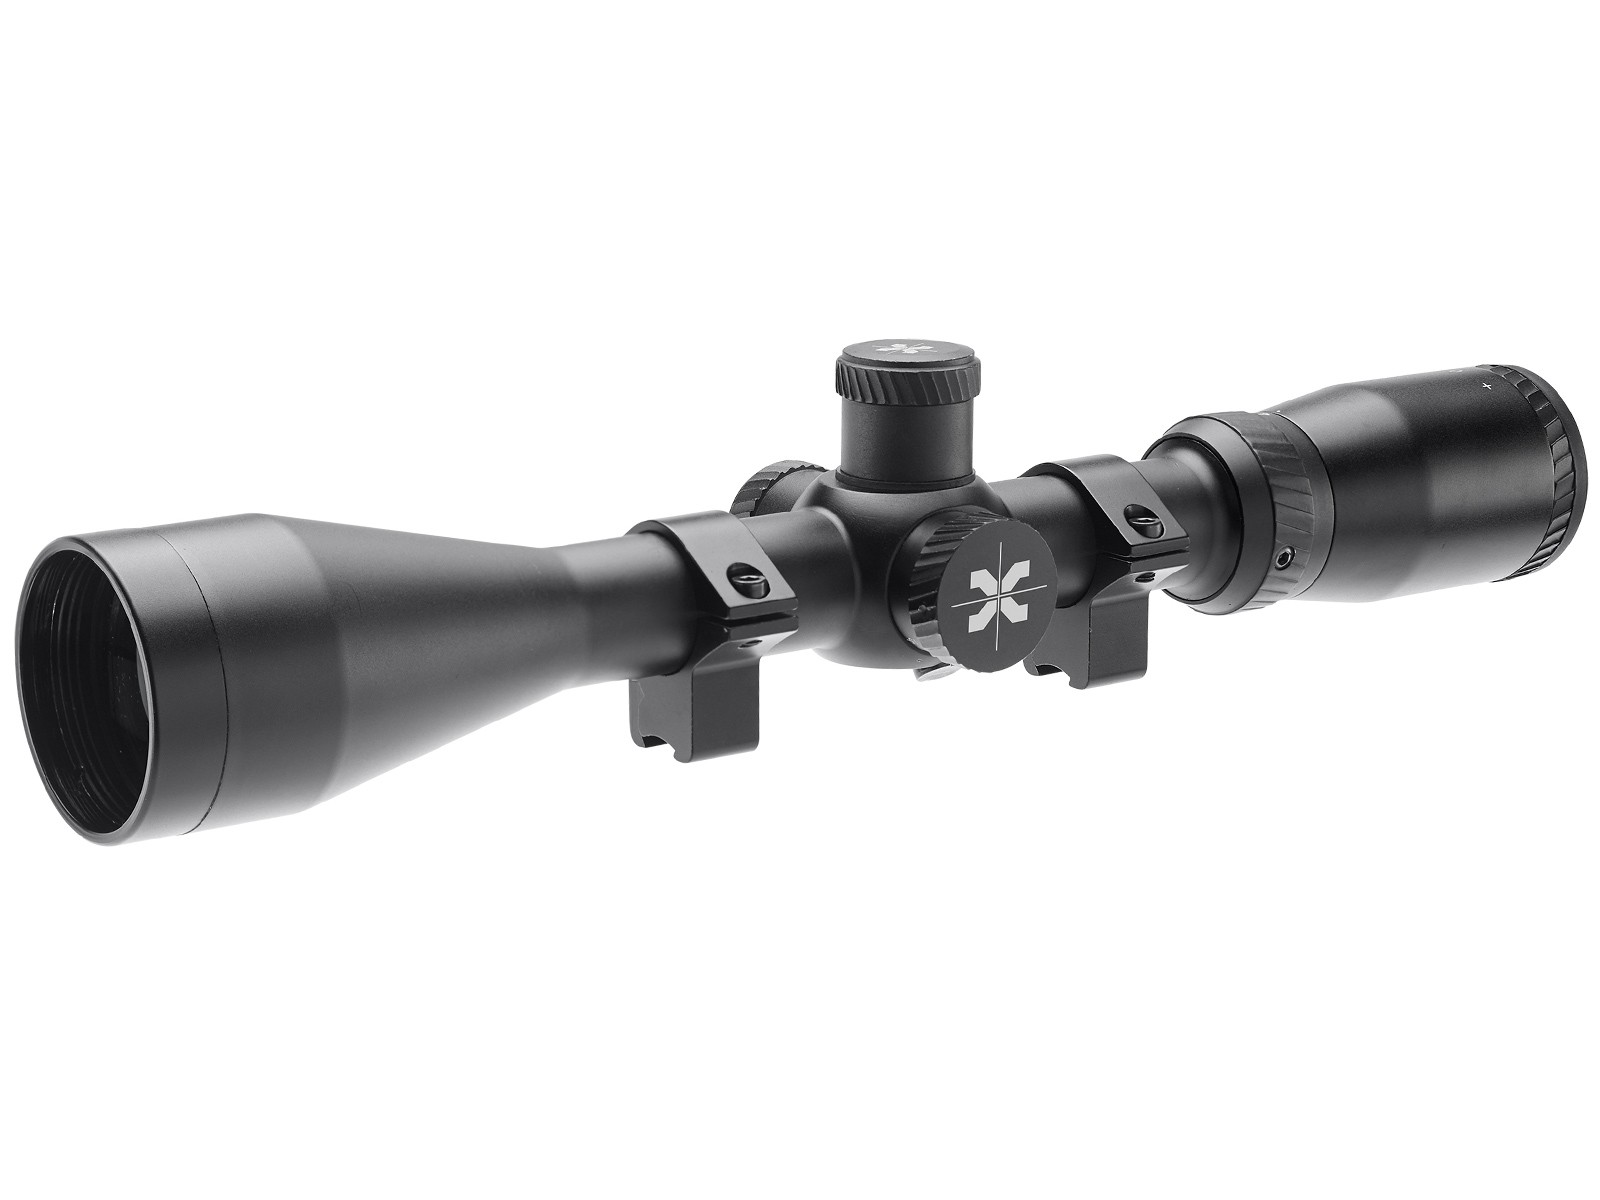 Axeon 4-16x44 AO Rifle Scope, Duplex Reticle, 1/4 MOA, 1" Tube